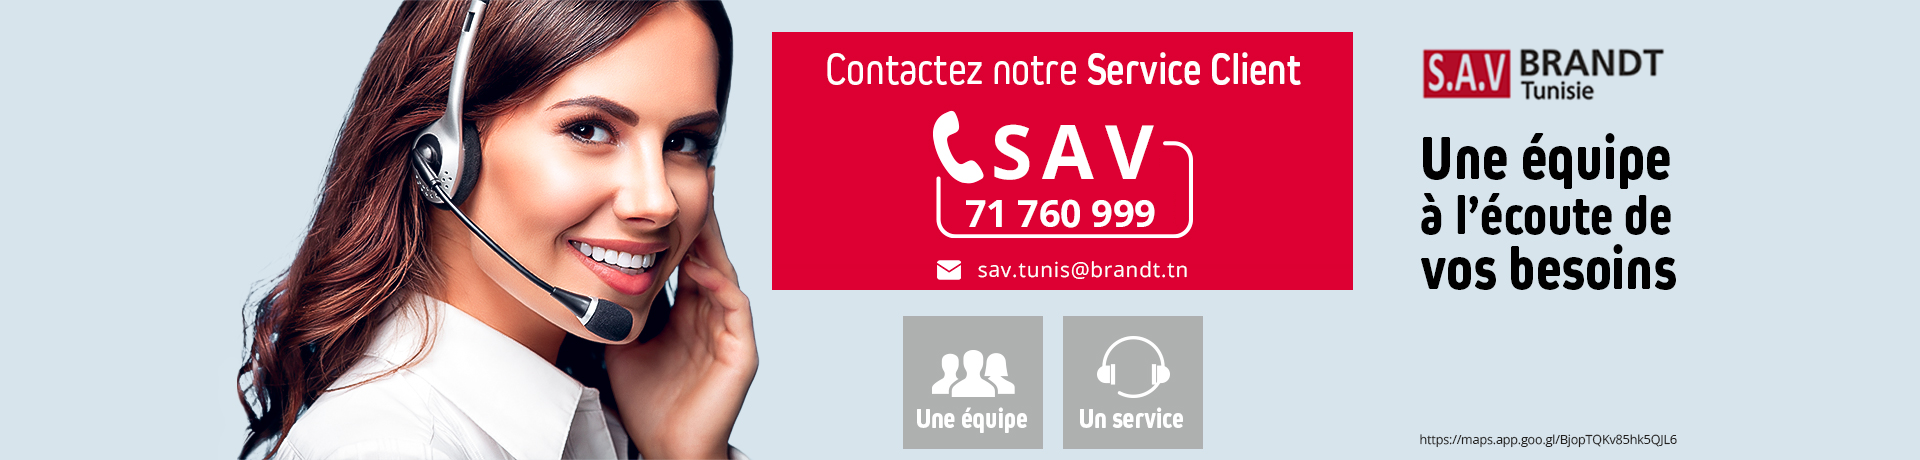 Brandt 3314 appel service